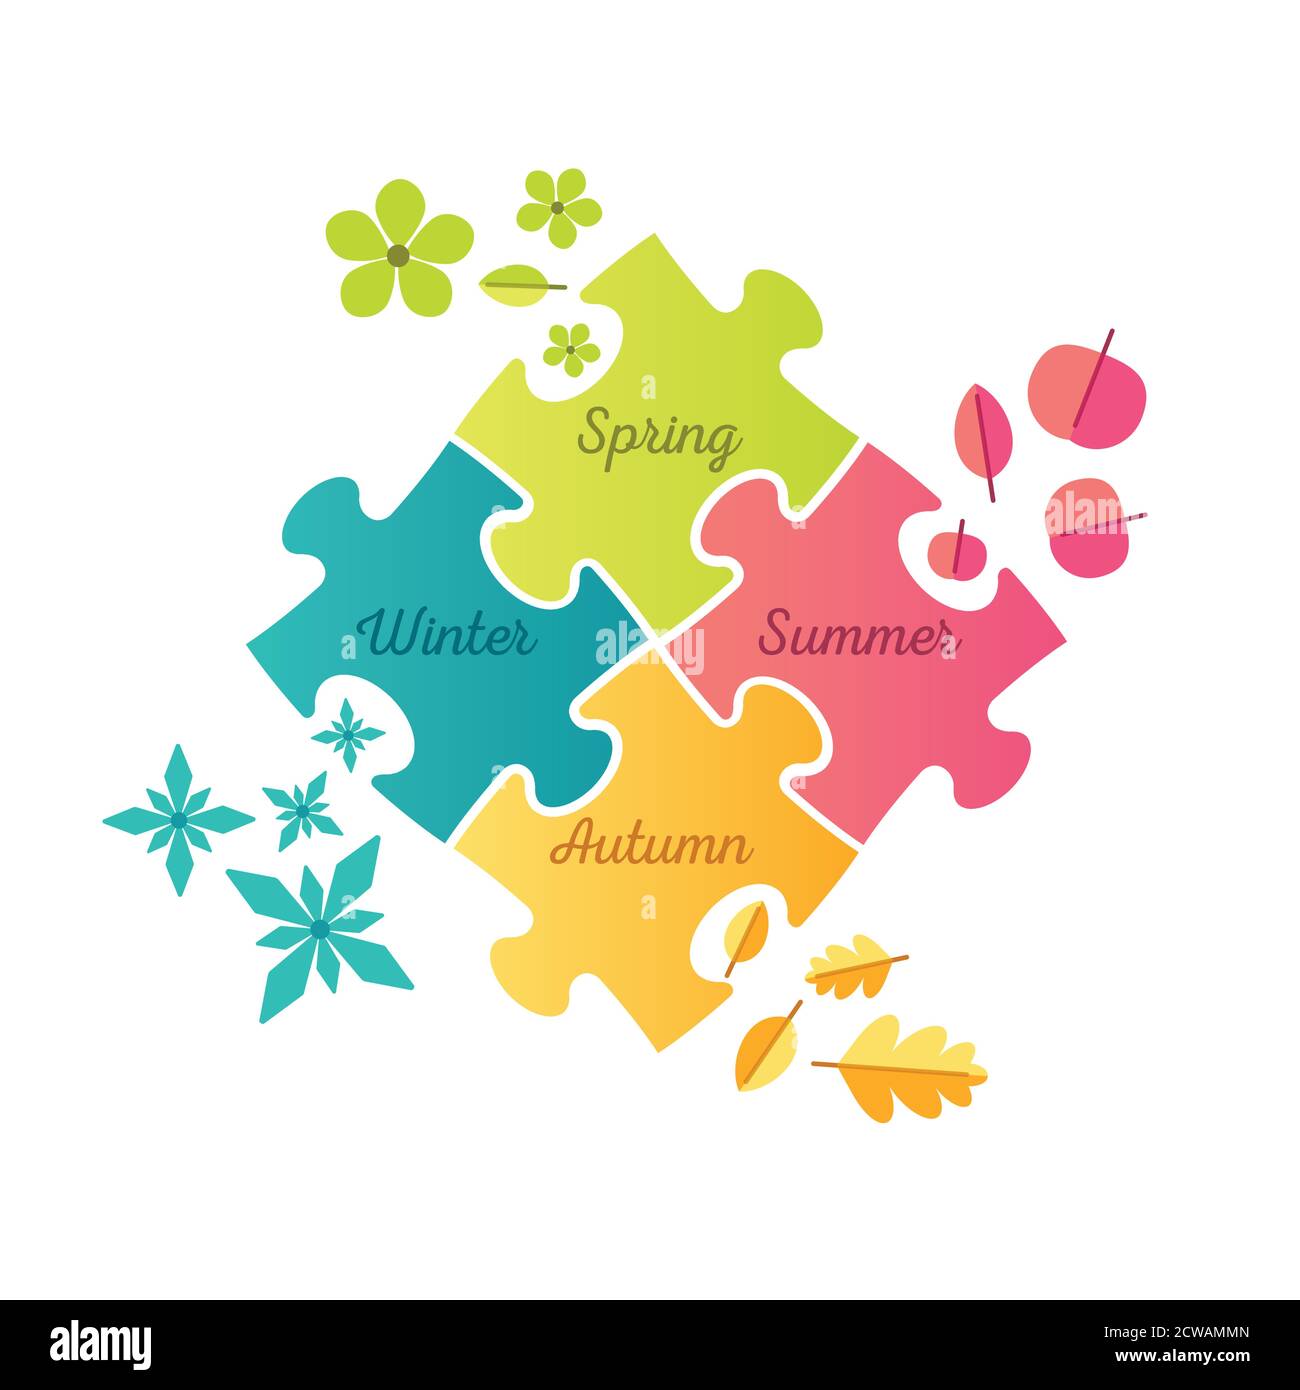 Jahreszeiten Puzzle-Infografik - Frühling, Sommer, Herbst, Winter Stock Vektor